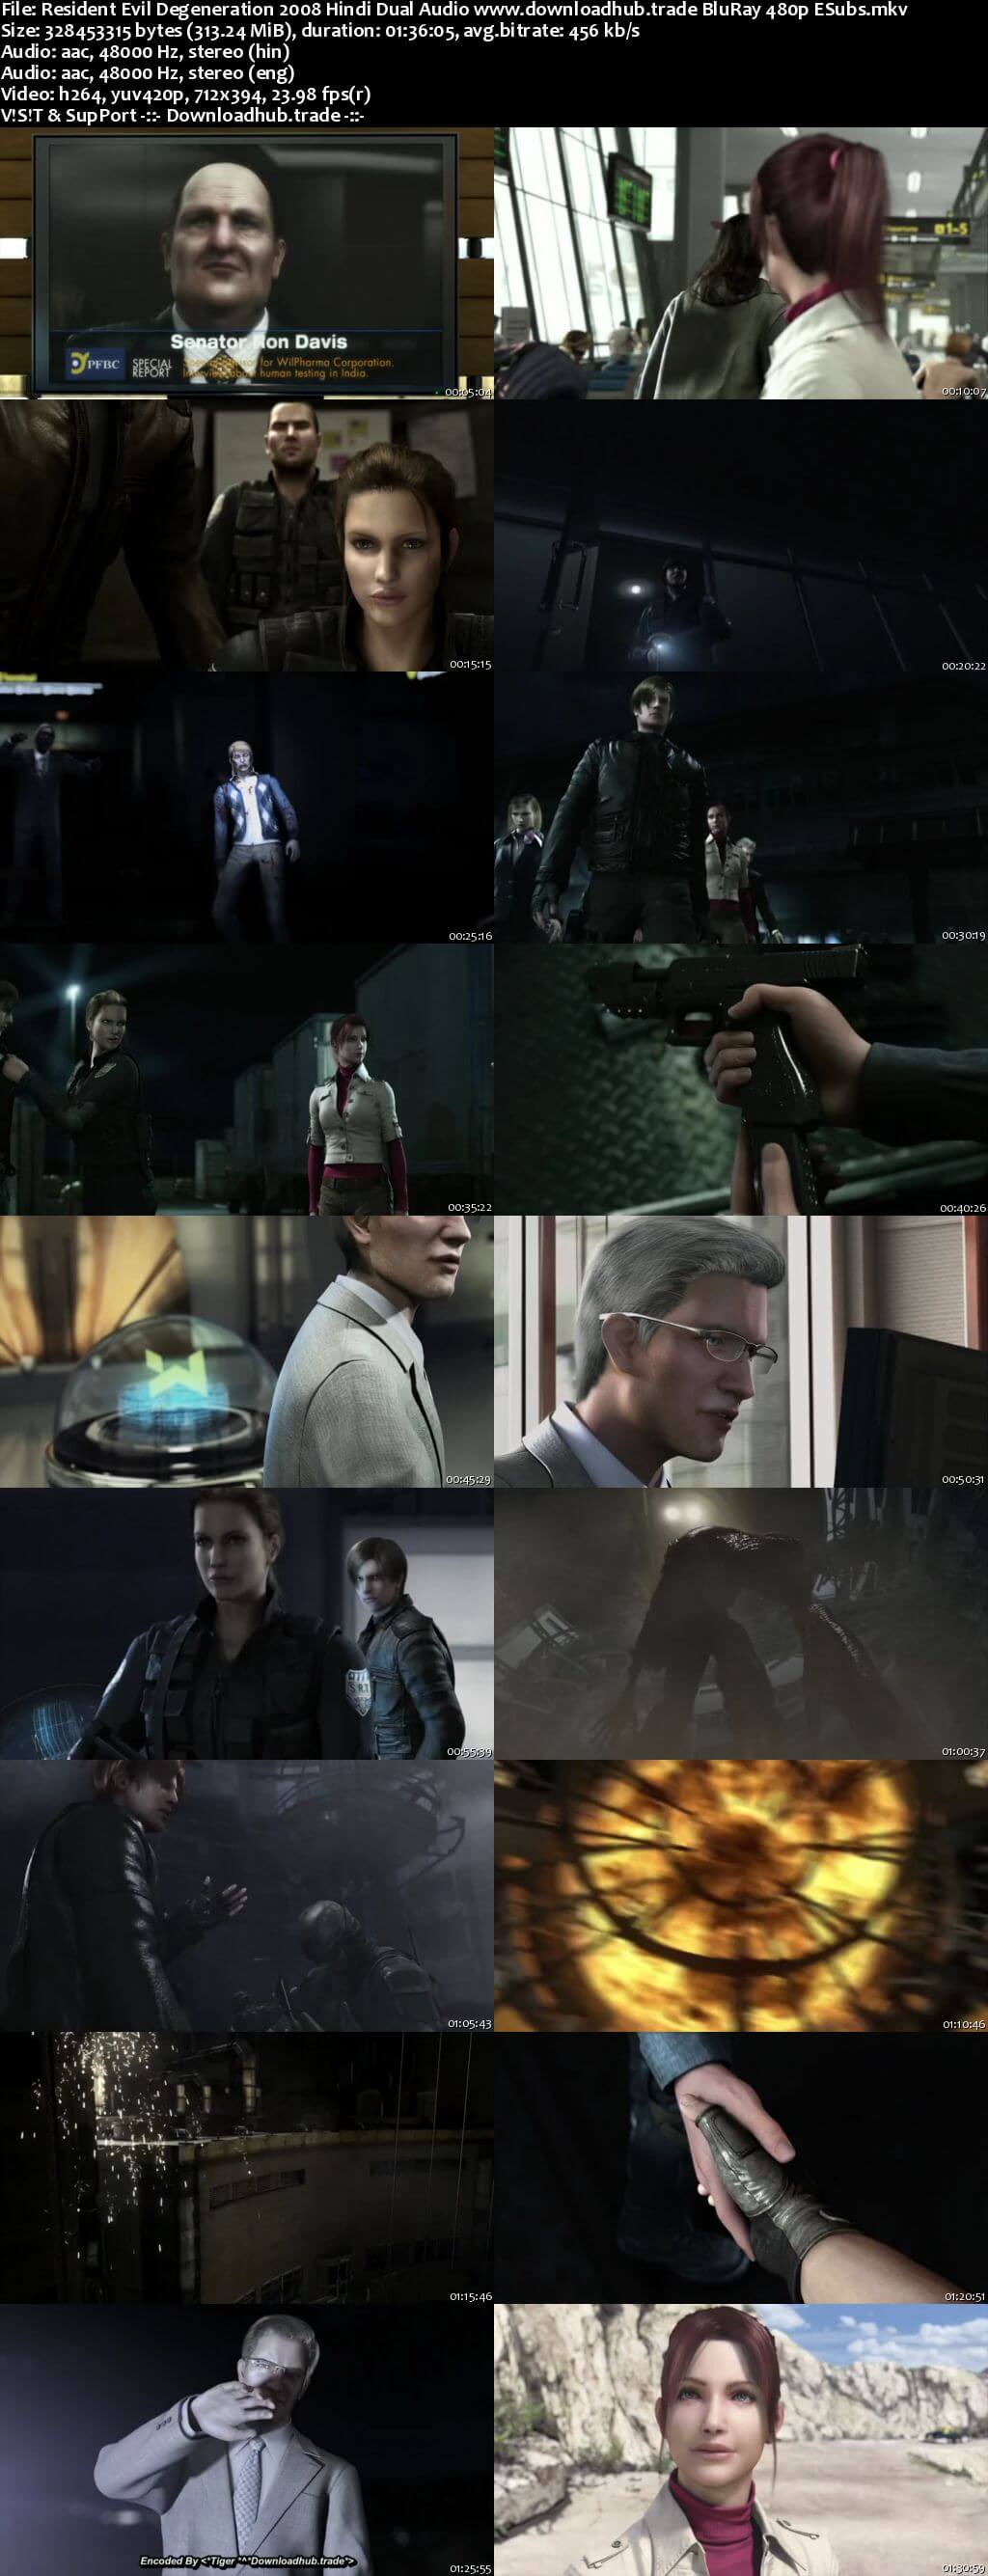 Resident Evil Degeneration 2008 Hindi Dual Audio 300MB BluRay 480p ESubs